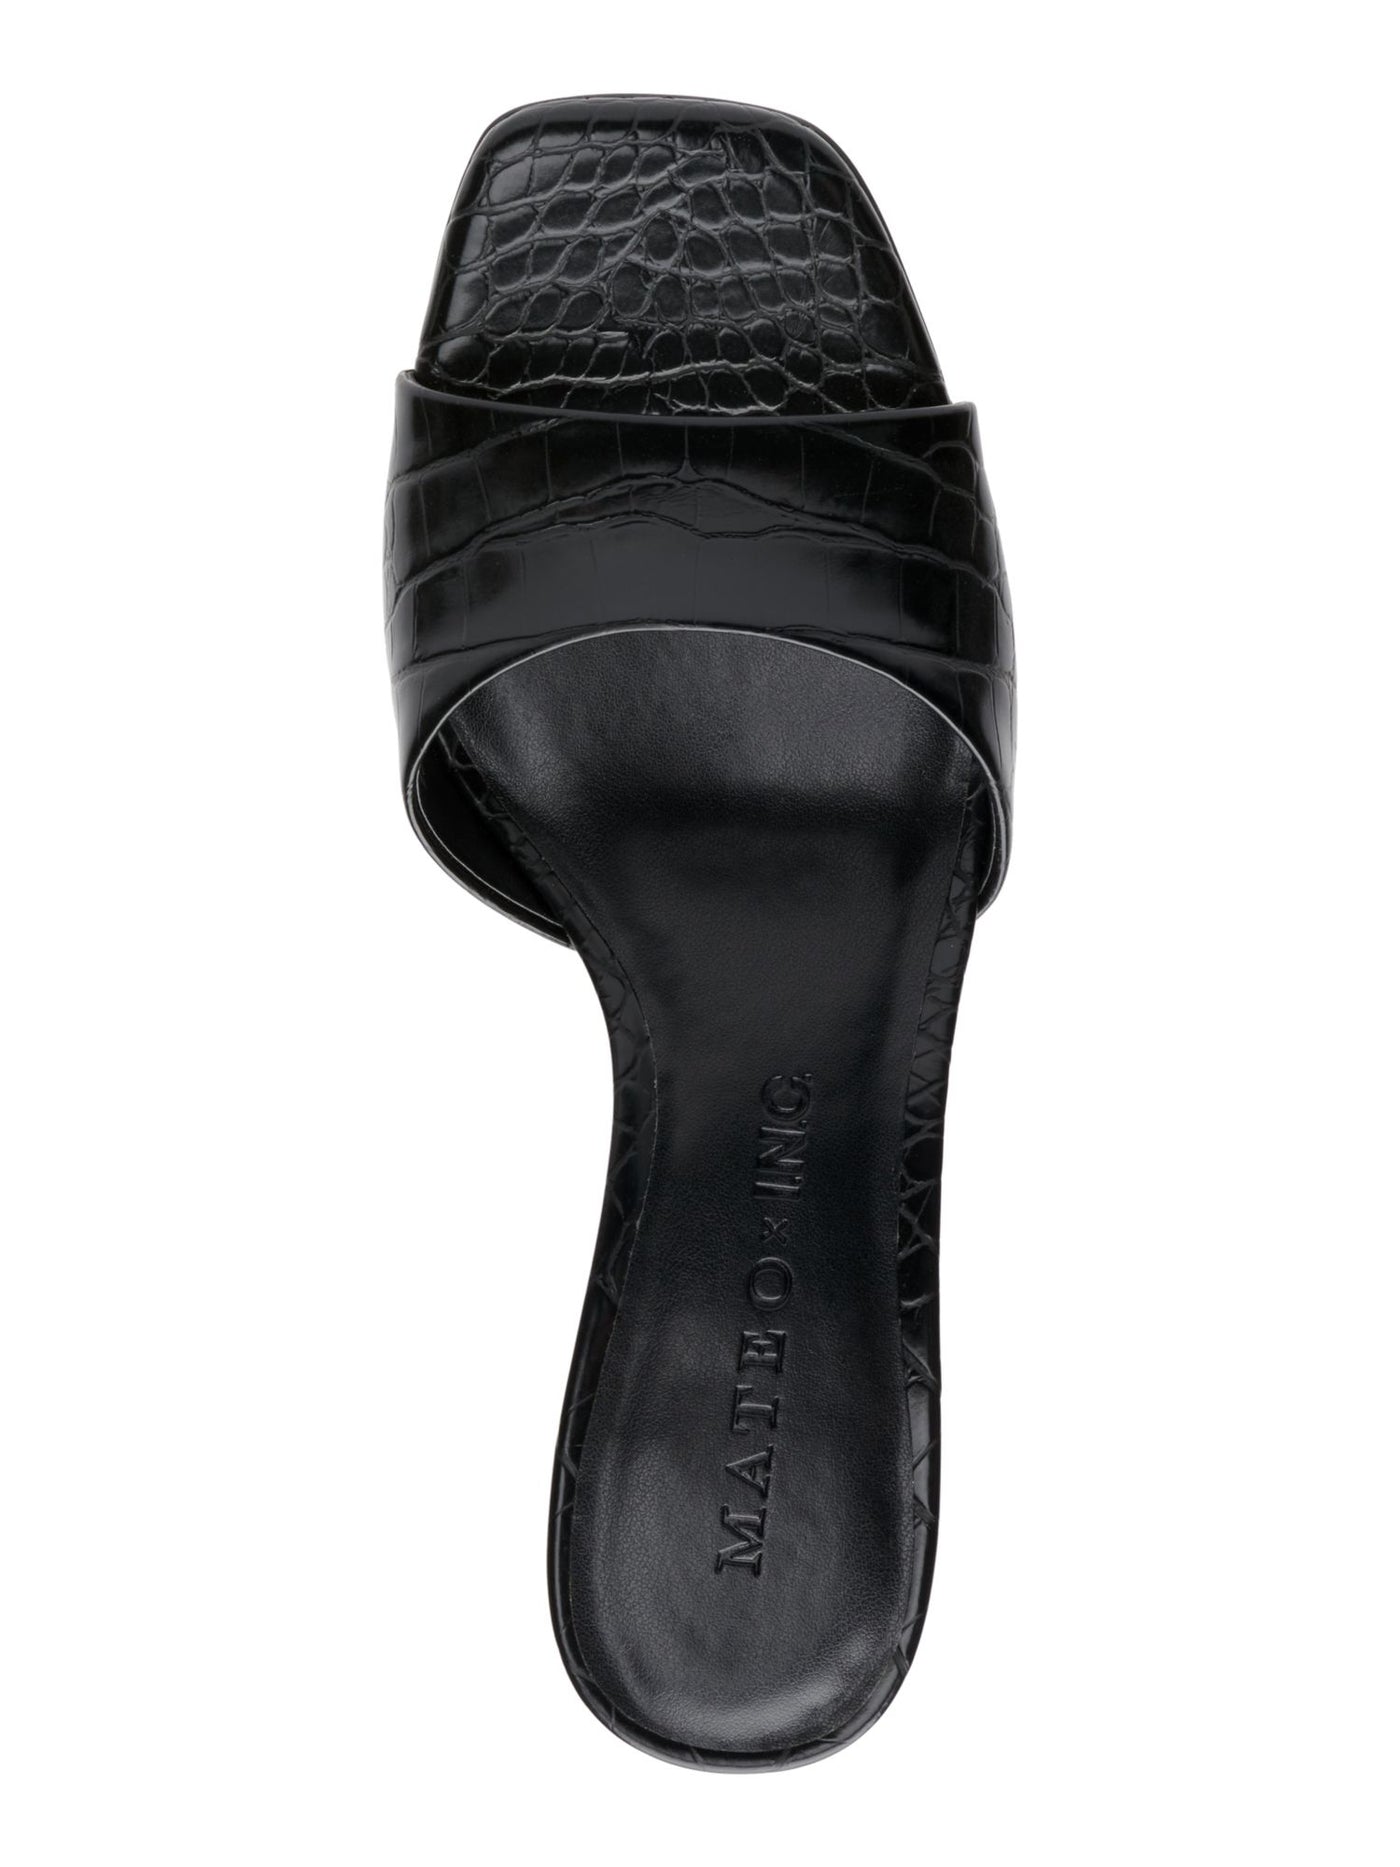 INC Womens Black Croc Print Isabella Open Toe Sculpted Heel Slip On Dress Sandals Shoes 5.5 M